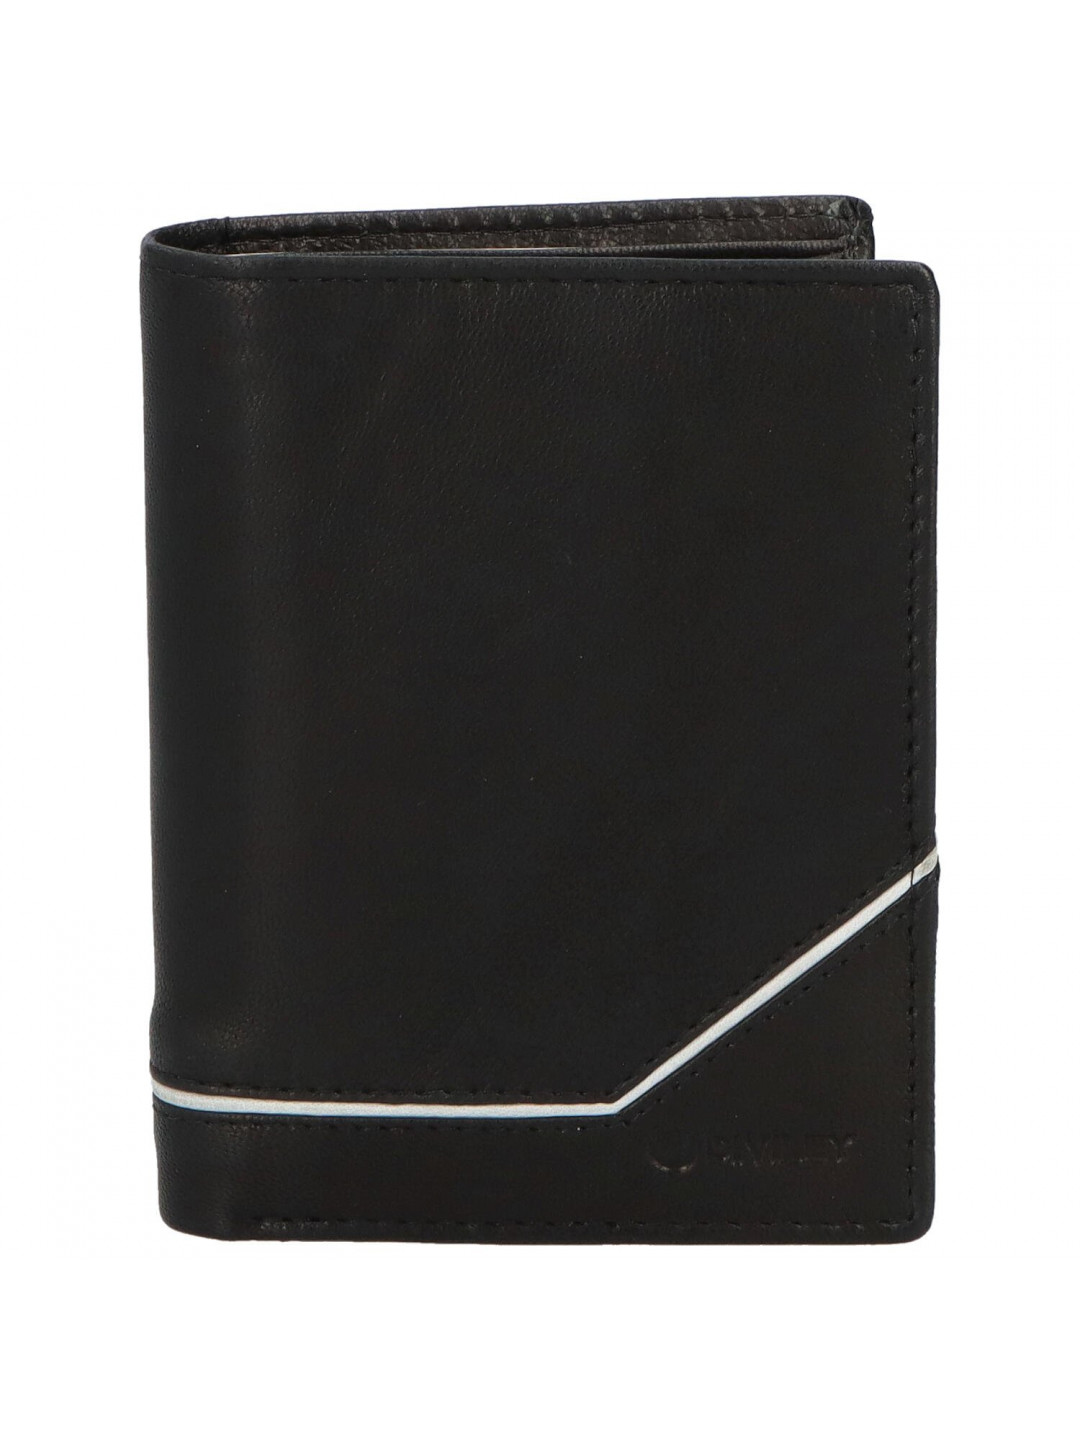 Pánská pevná kožená peněženka černá – Diviley Kainat White